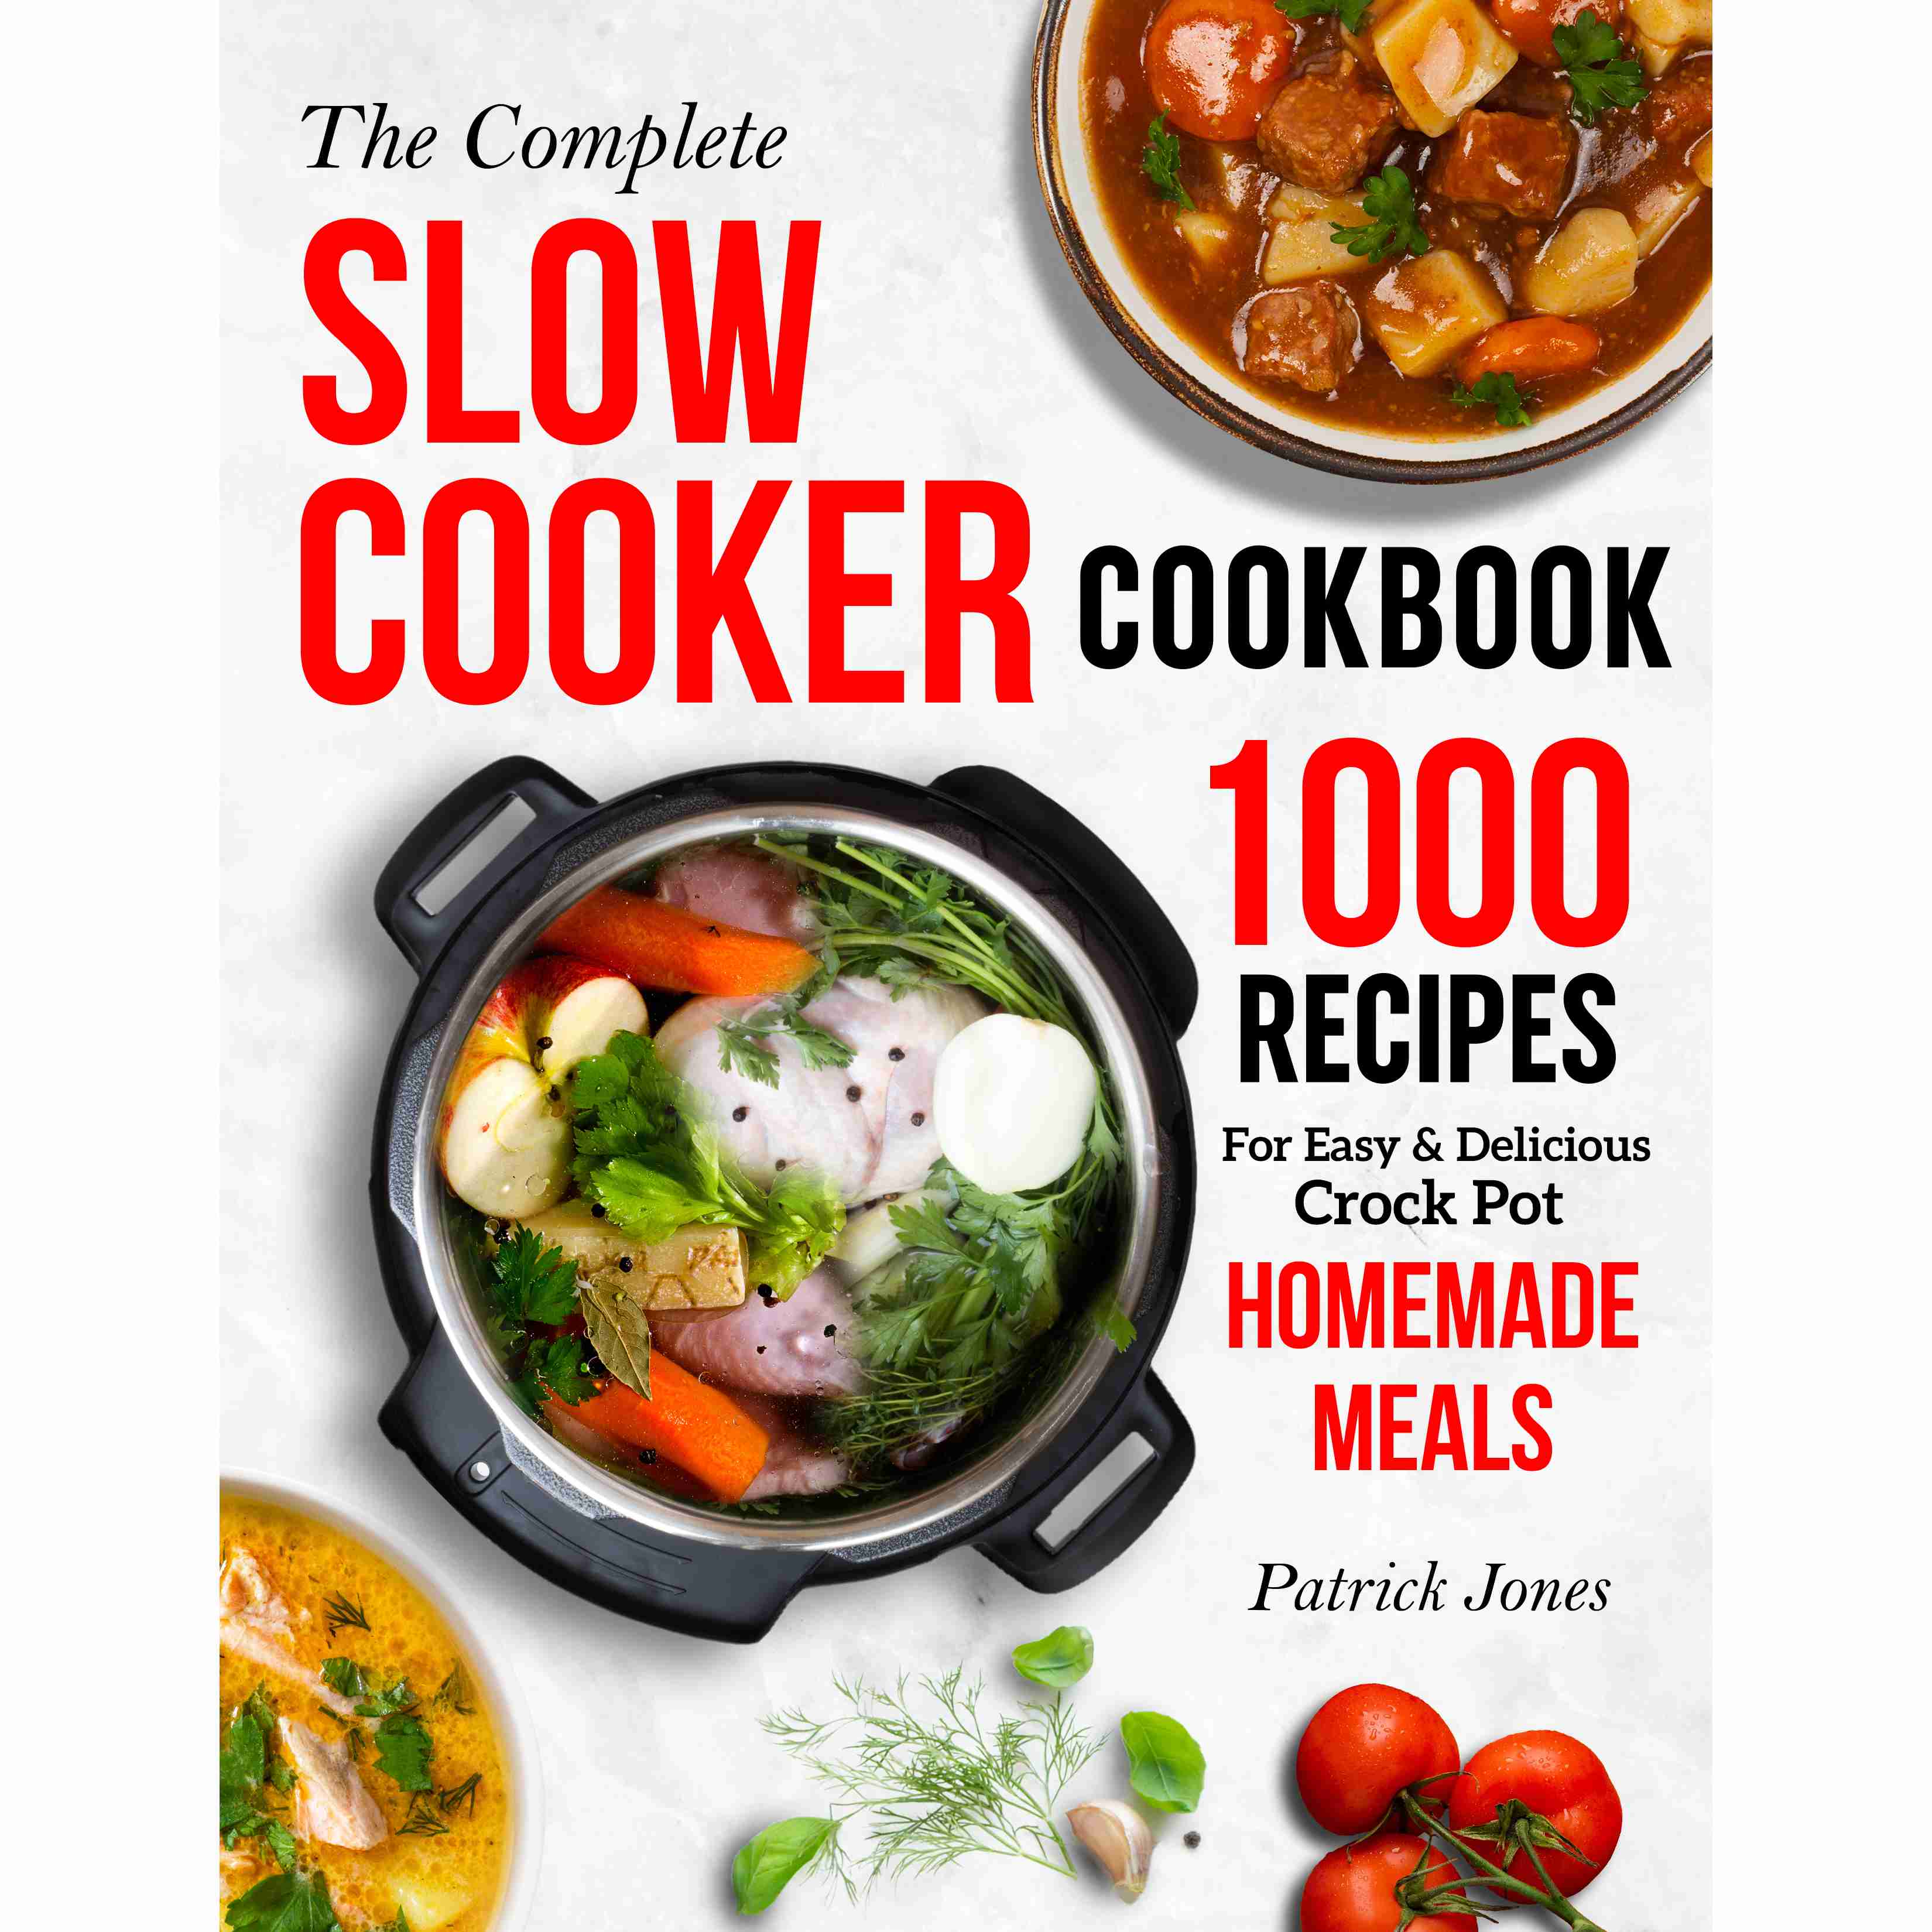 cookbook with cash back rebate